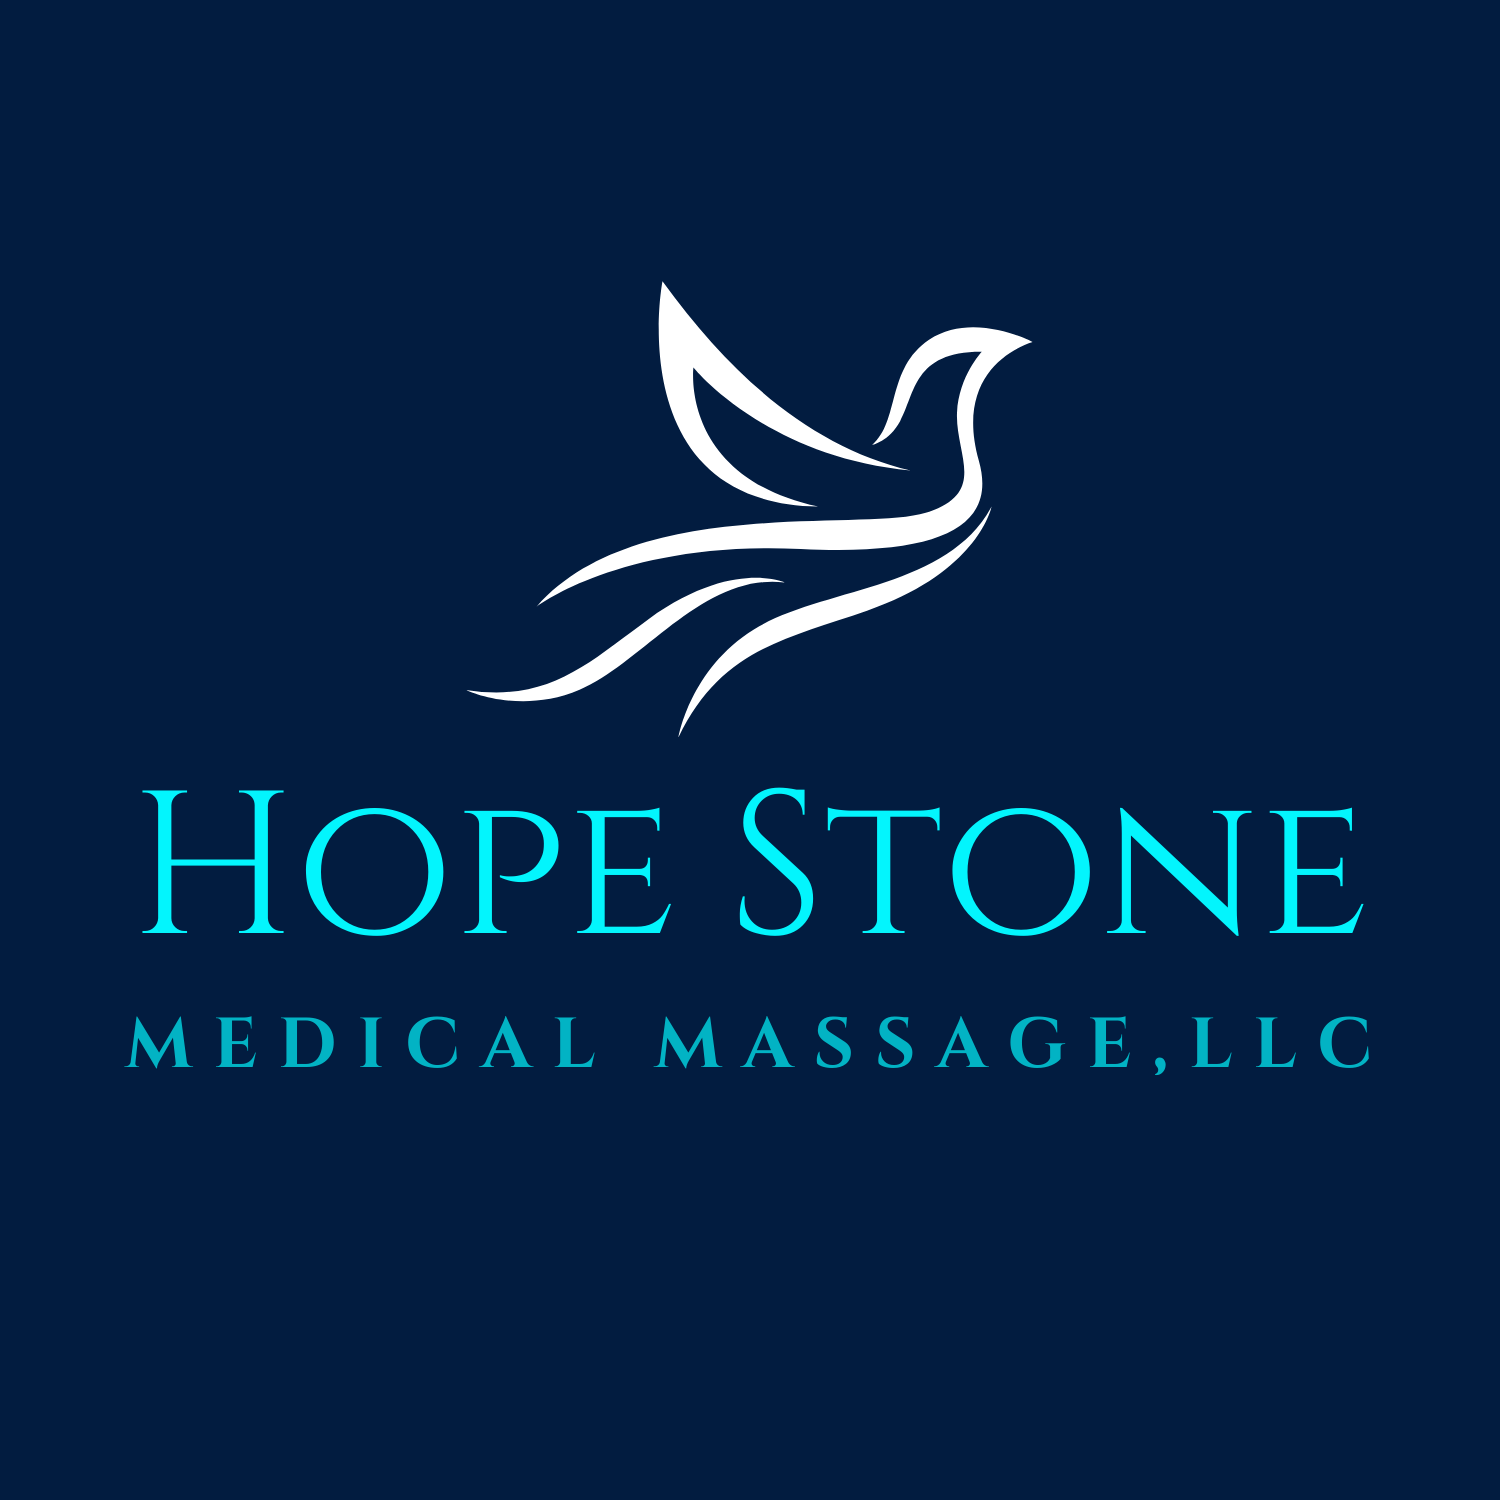 Hope Stone Medical Massage, LLC